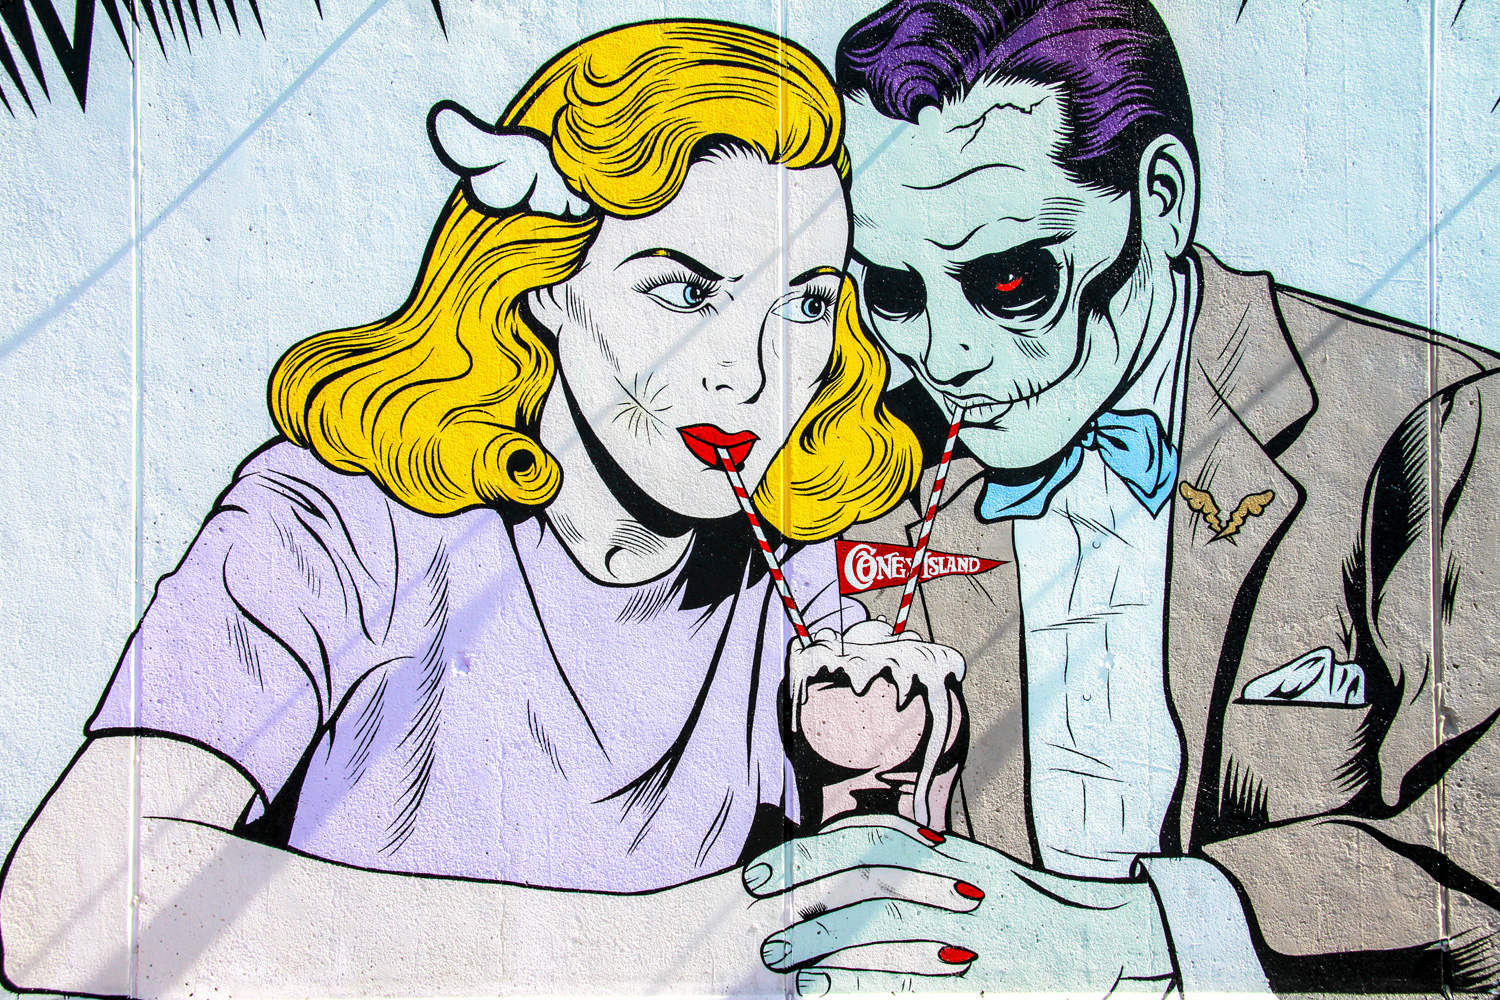 graffiti of a man and woman character drinking